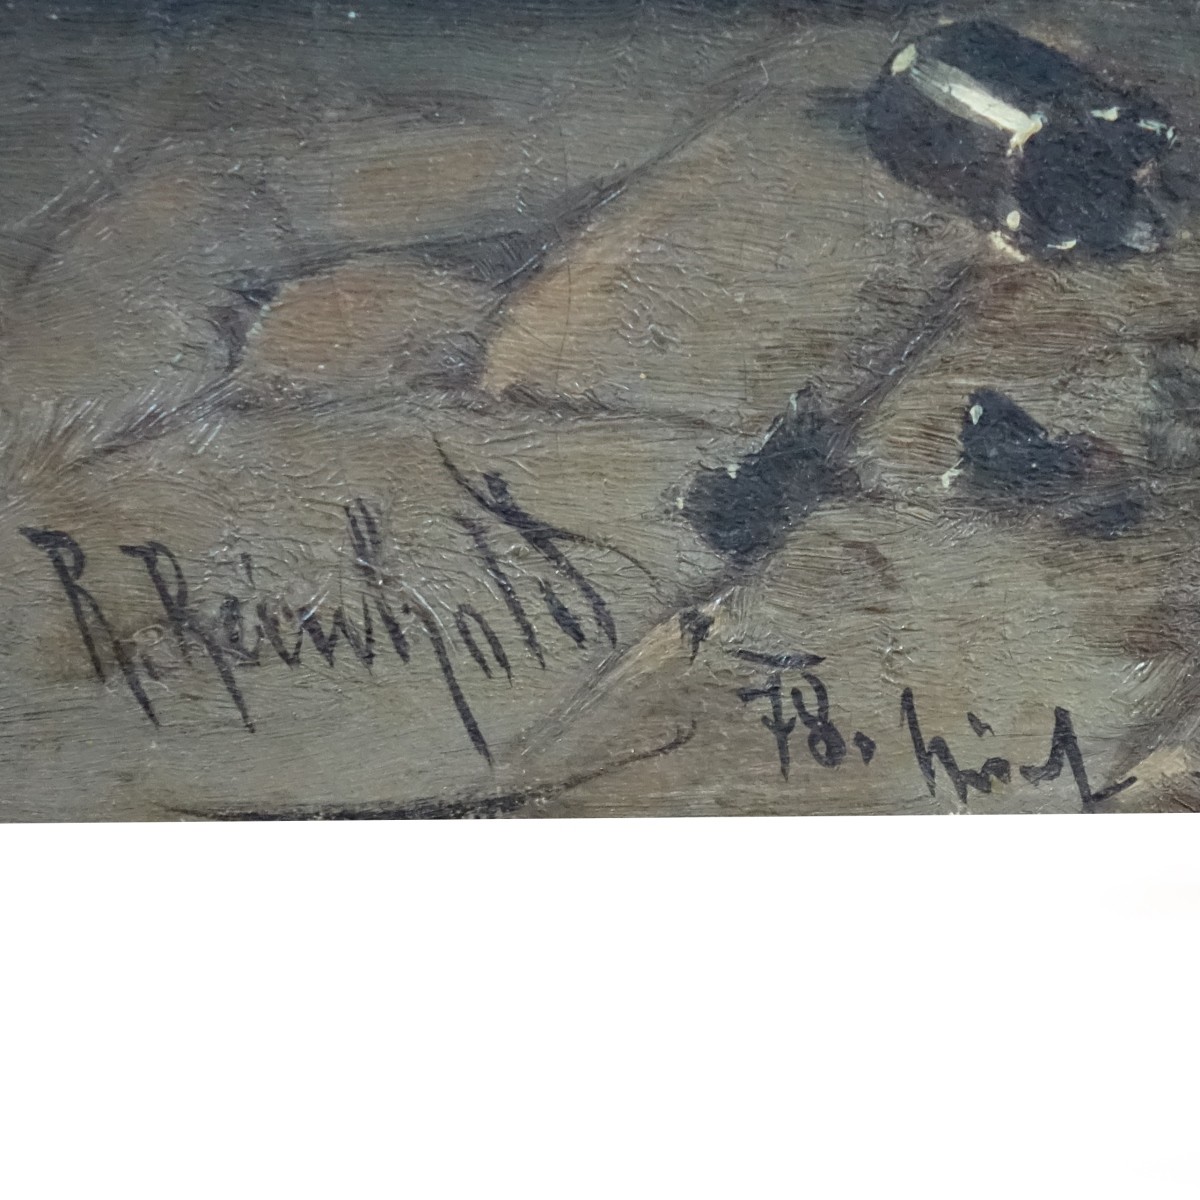 R Reinhold 1878 Oil on Canvas "Wine Monk"